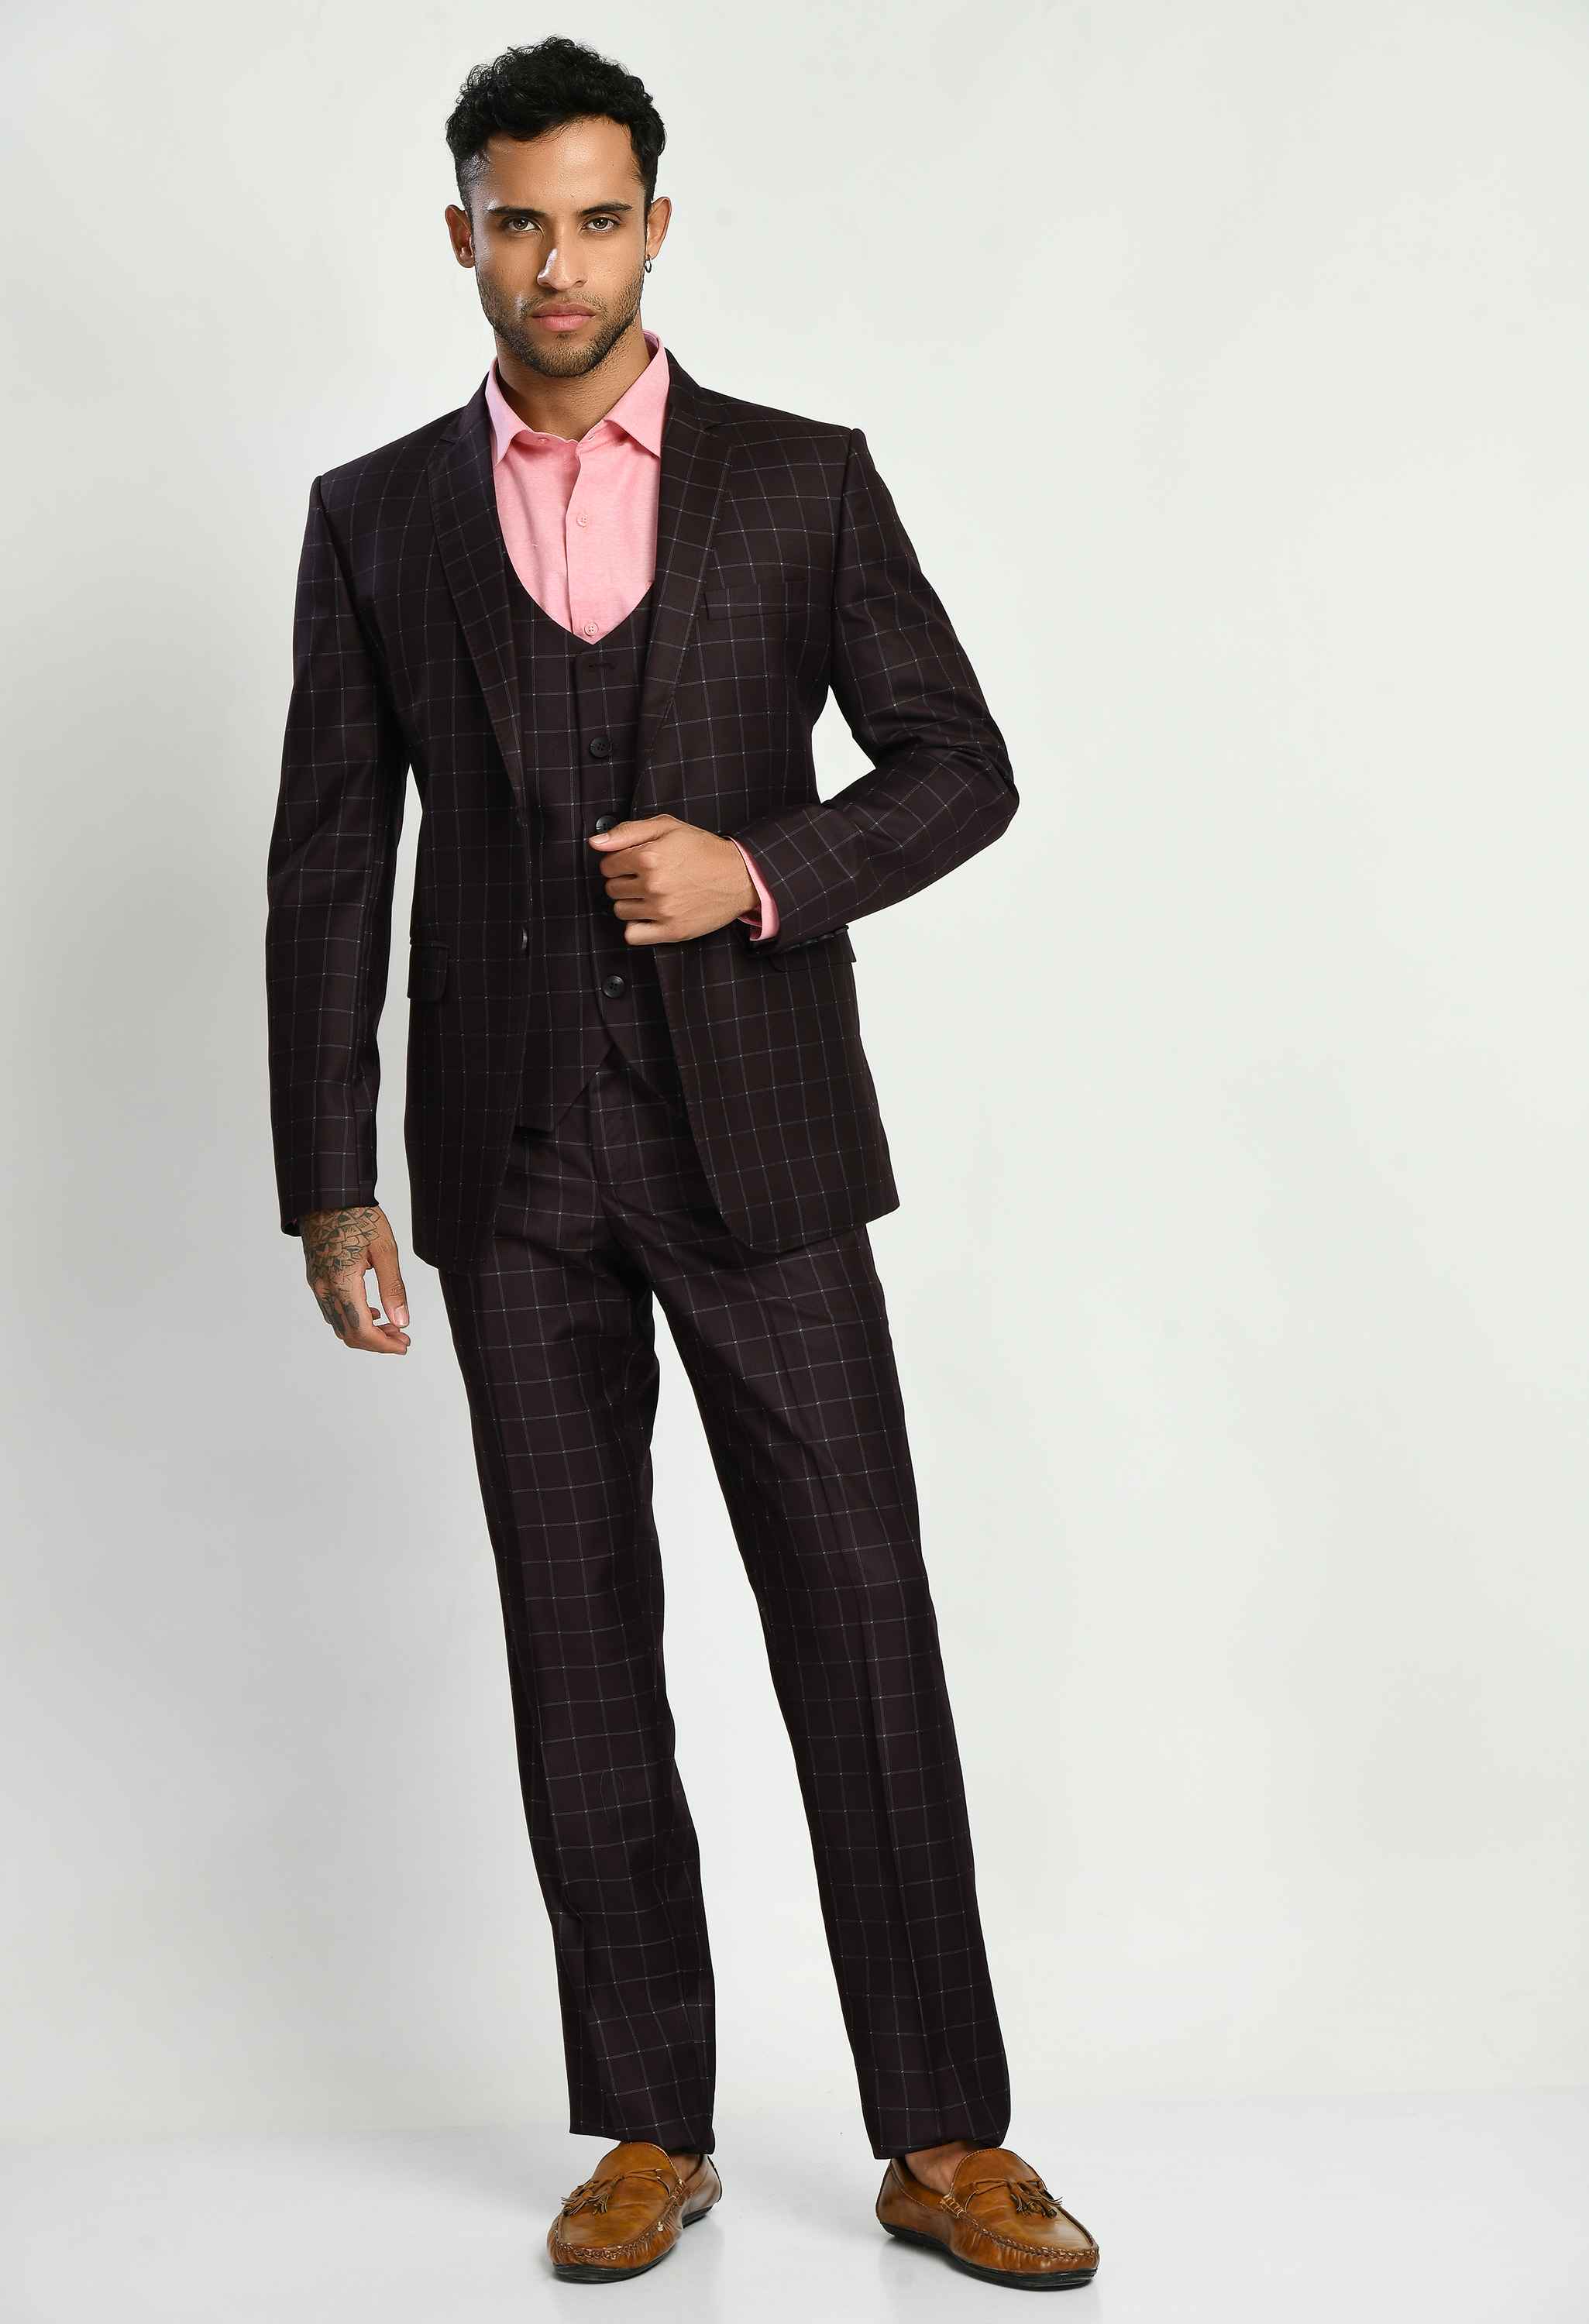 Men's Tuxedo Wine Suit Set